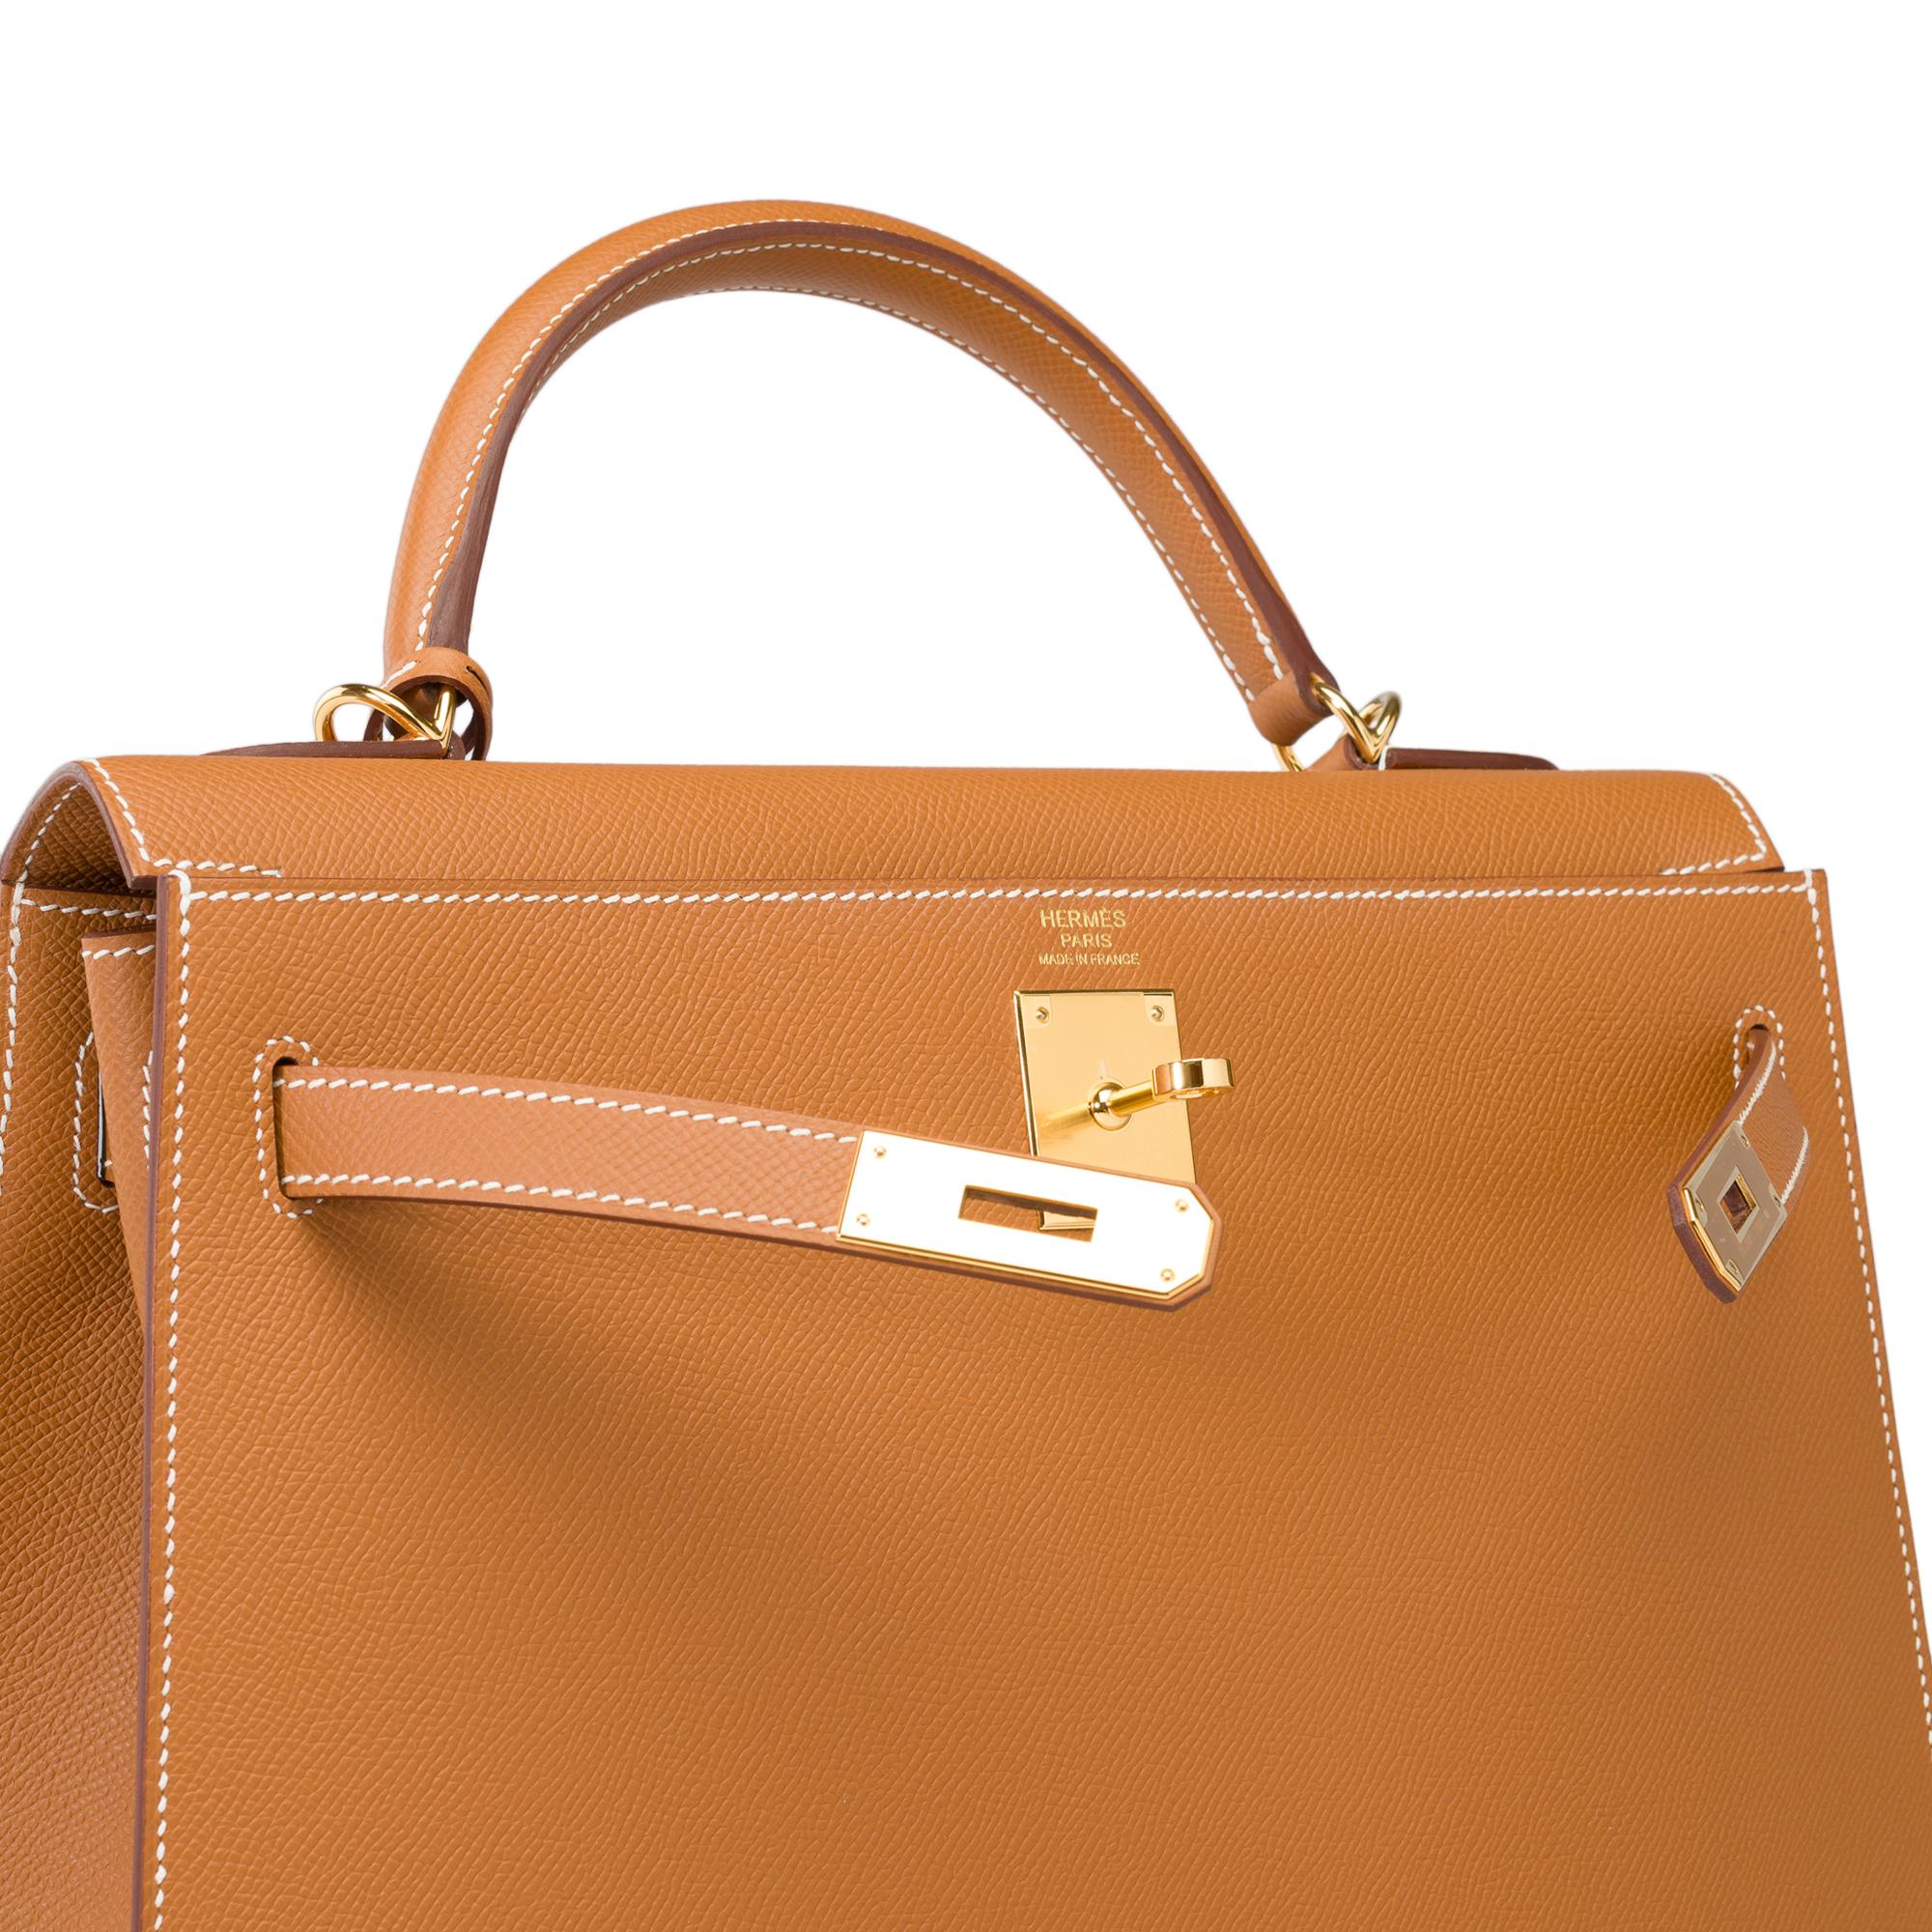 New Hermès Kelly 32 sellier handbag strap in Camel Epsom calf leather, GHW For Sale 3